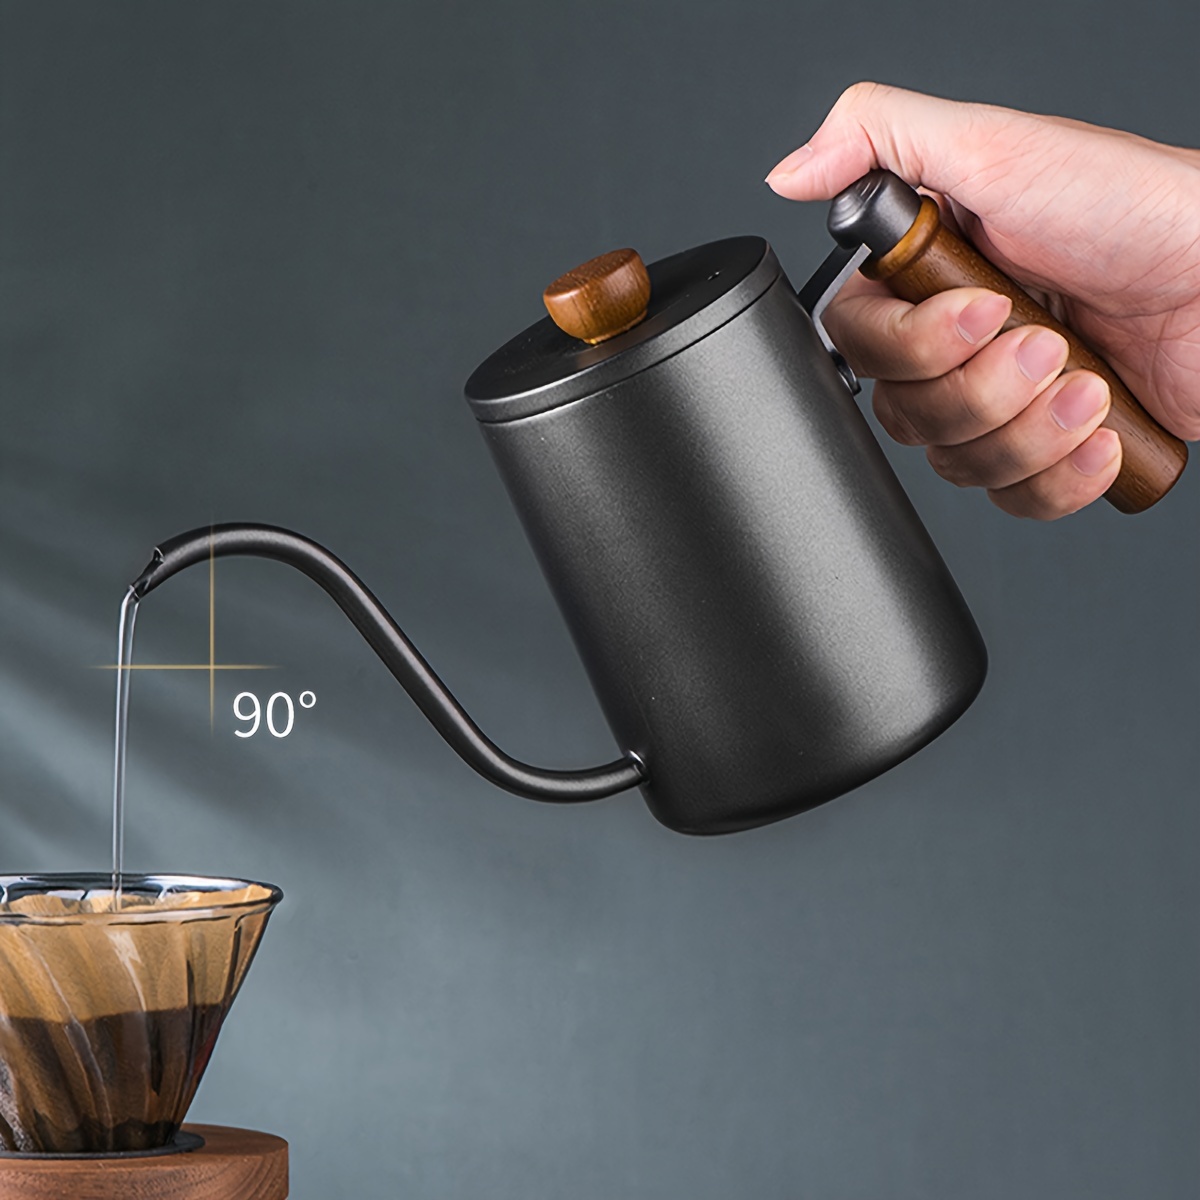 TAMAGOxORIGAMI Pour Over Coffee Kit - Premium Set Giftbox - Shop  simple-real Coffee Pots & Accessories - Pinkoi